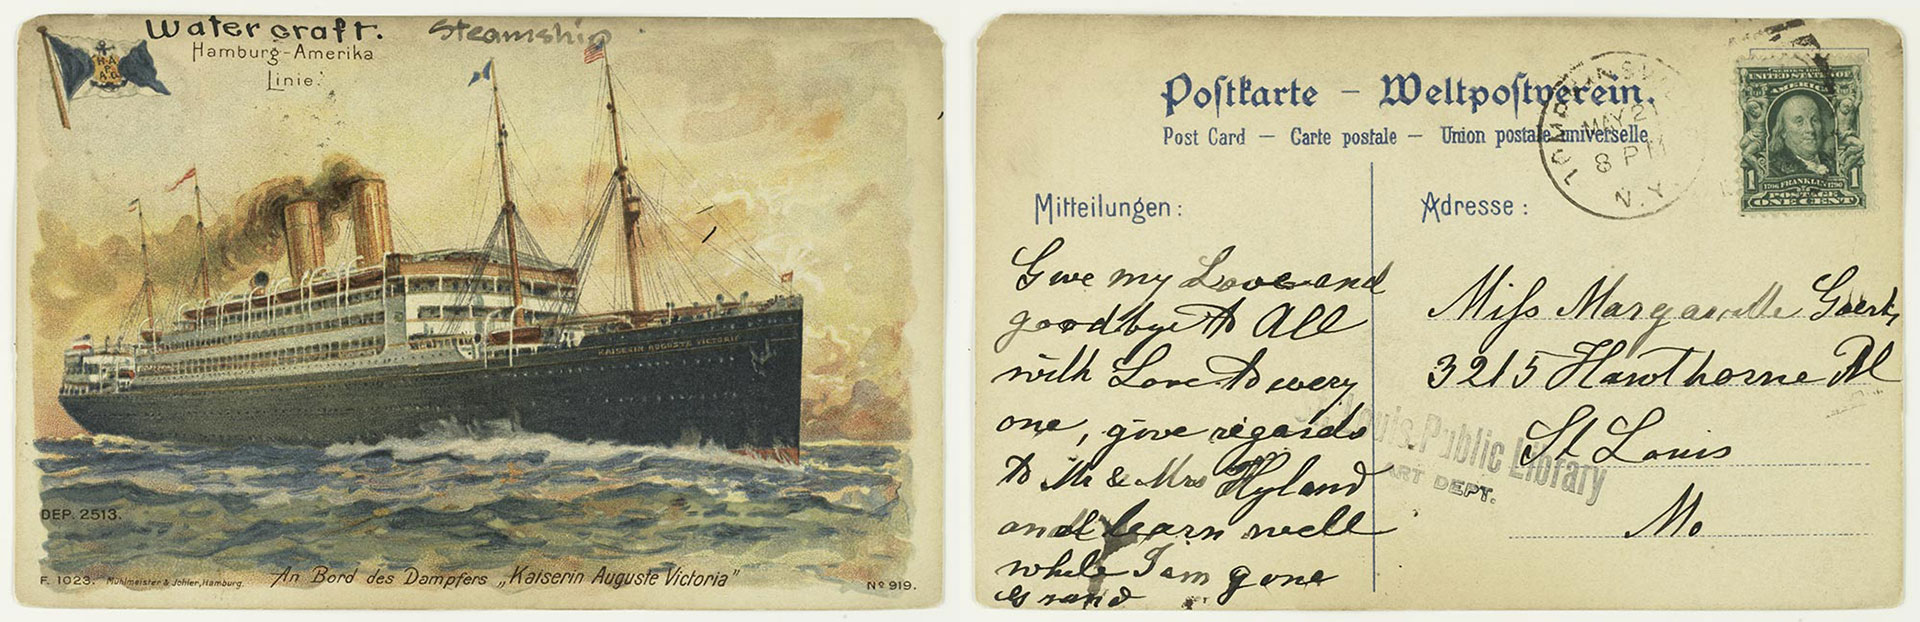 Hamburg-Amerika Linie, An Bord des Dampfers 